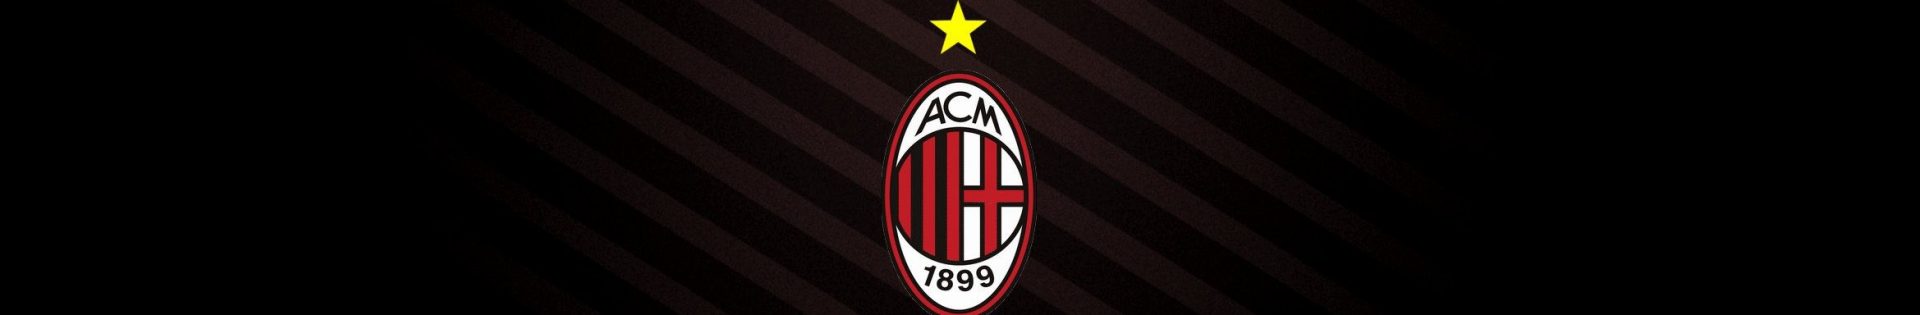 Fussballreise AC Mailand Perfect Tours Serie A (6)